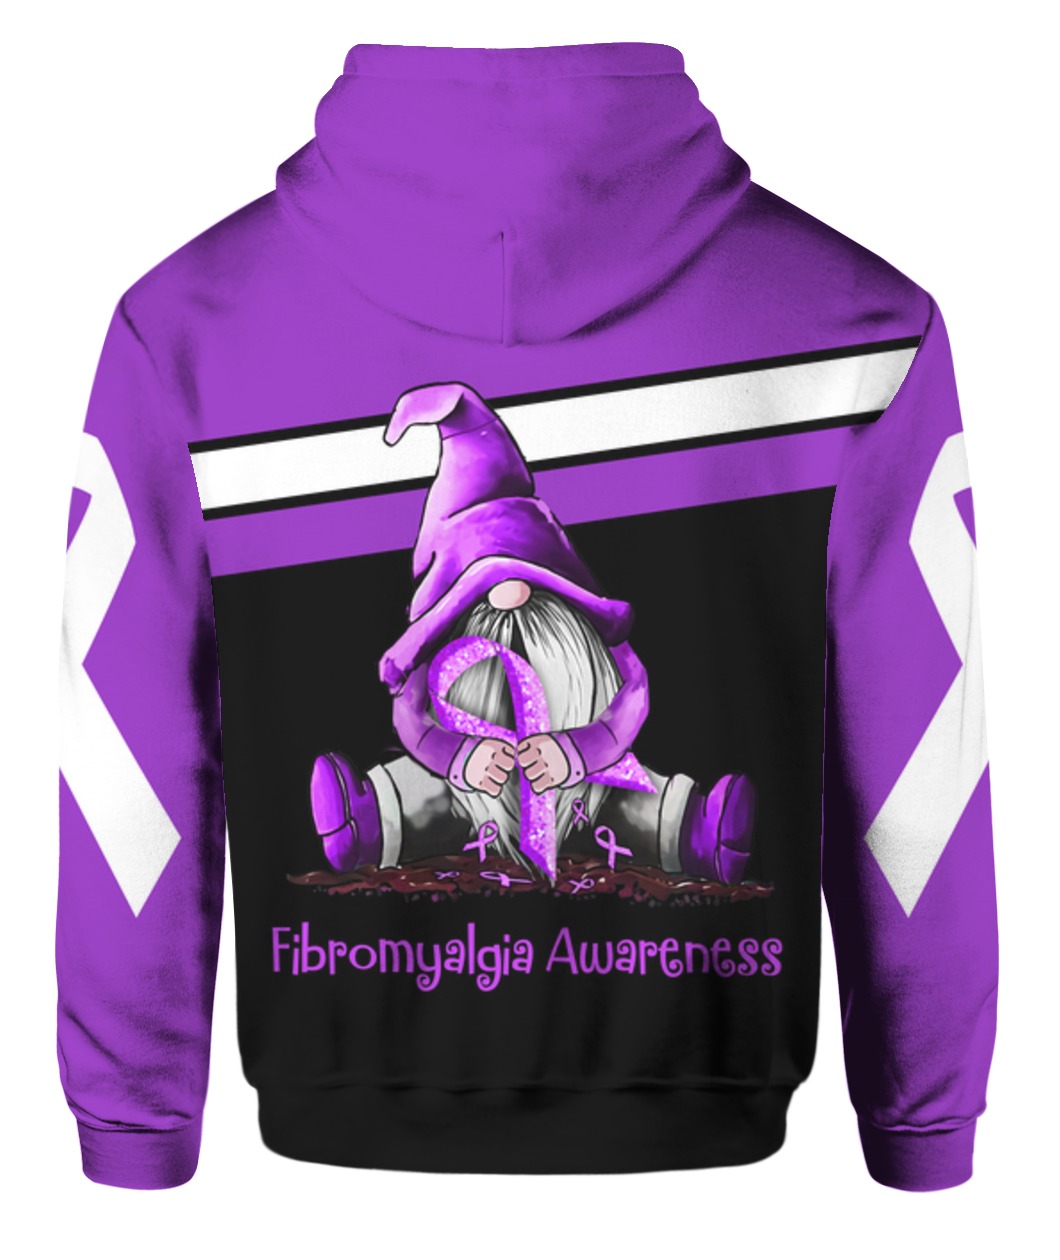 Fibromyalgia Awareness Gnome 3d hoodie, shirt and sweatshirt1